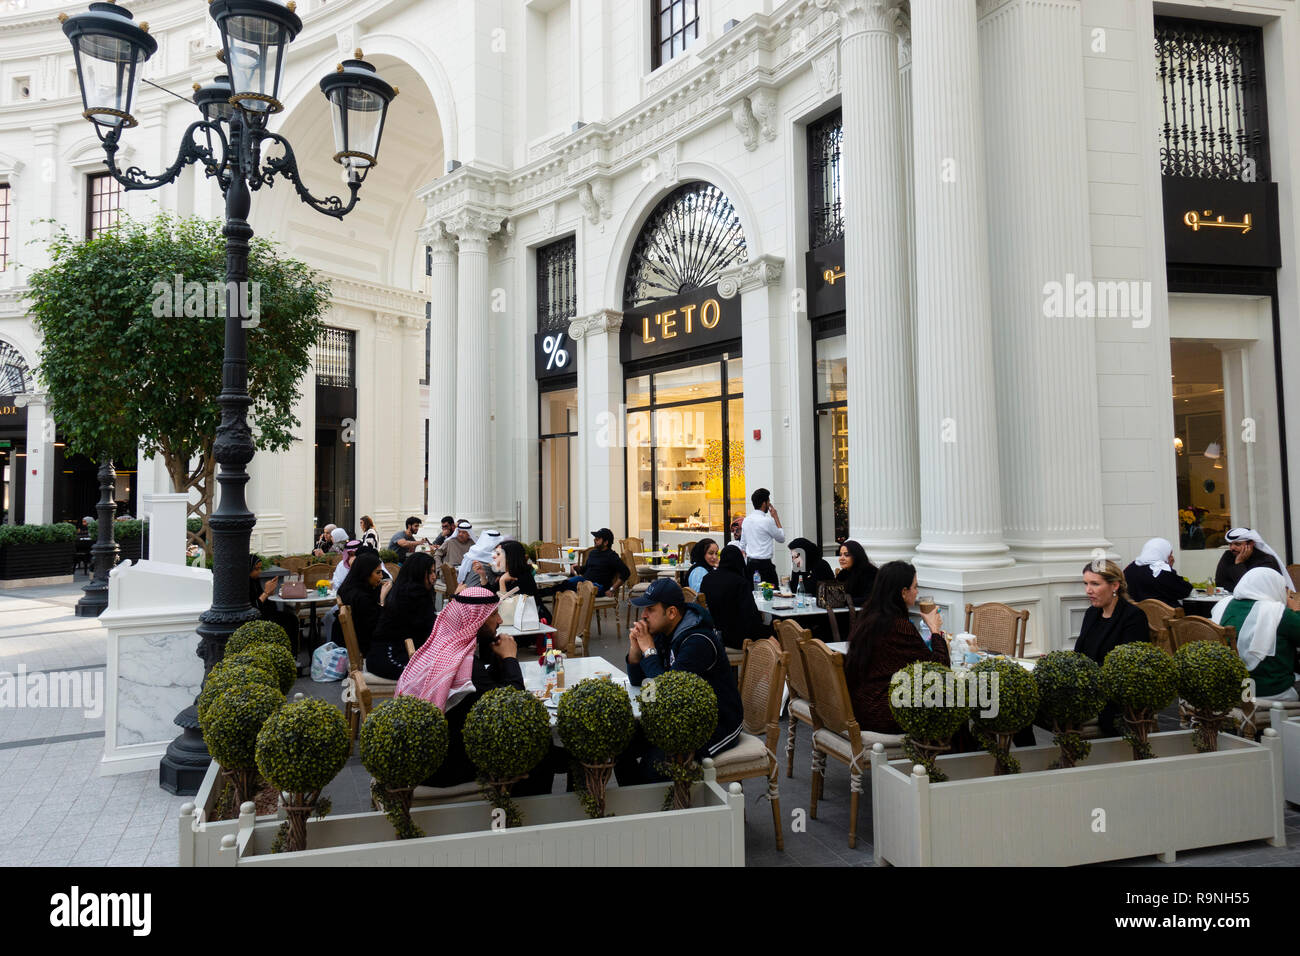 L'Eto cafe per i viali shopping mall in Kuwait City, Kuwait, Medio Oriente Foto Stock